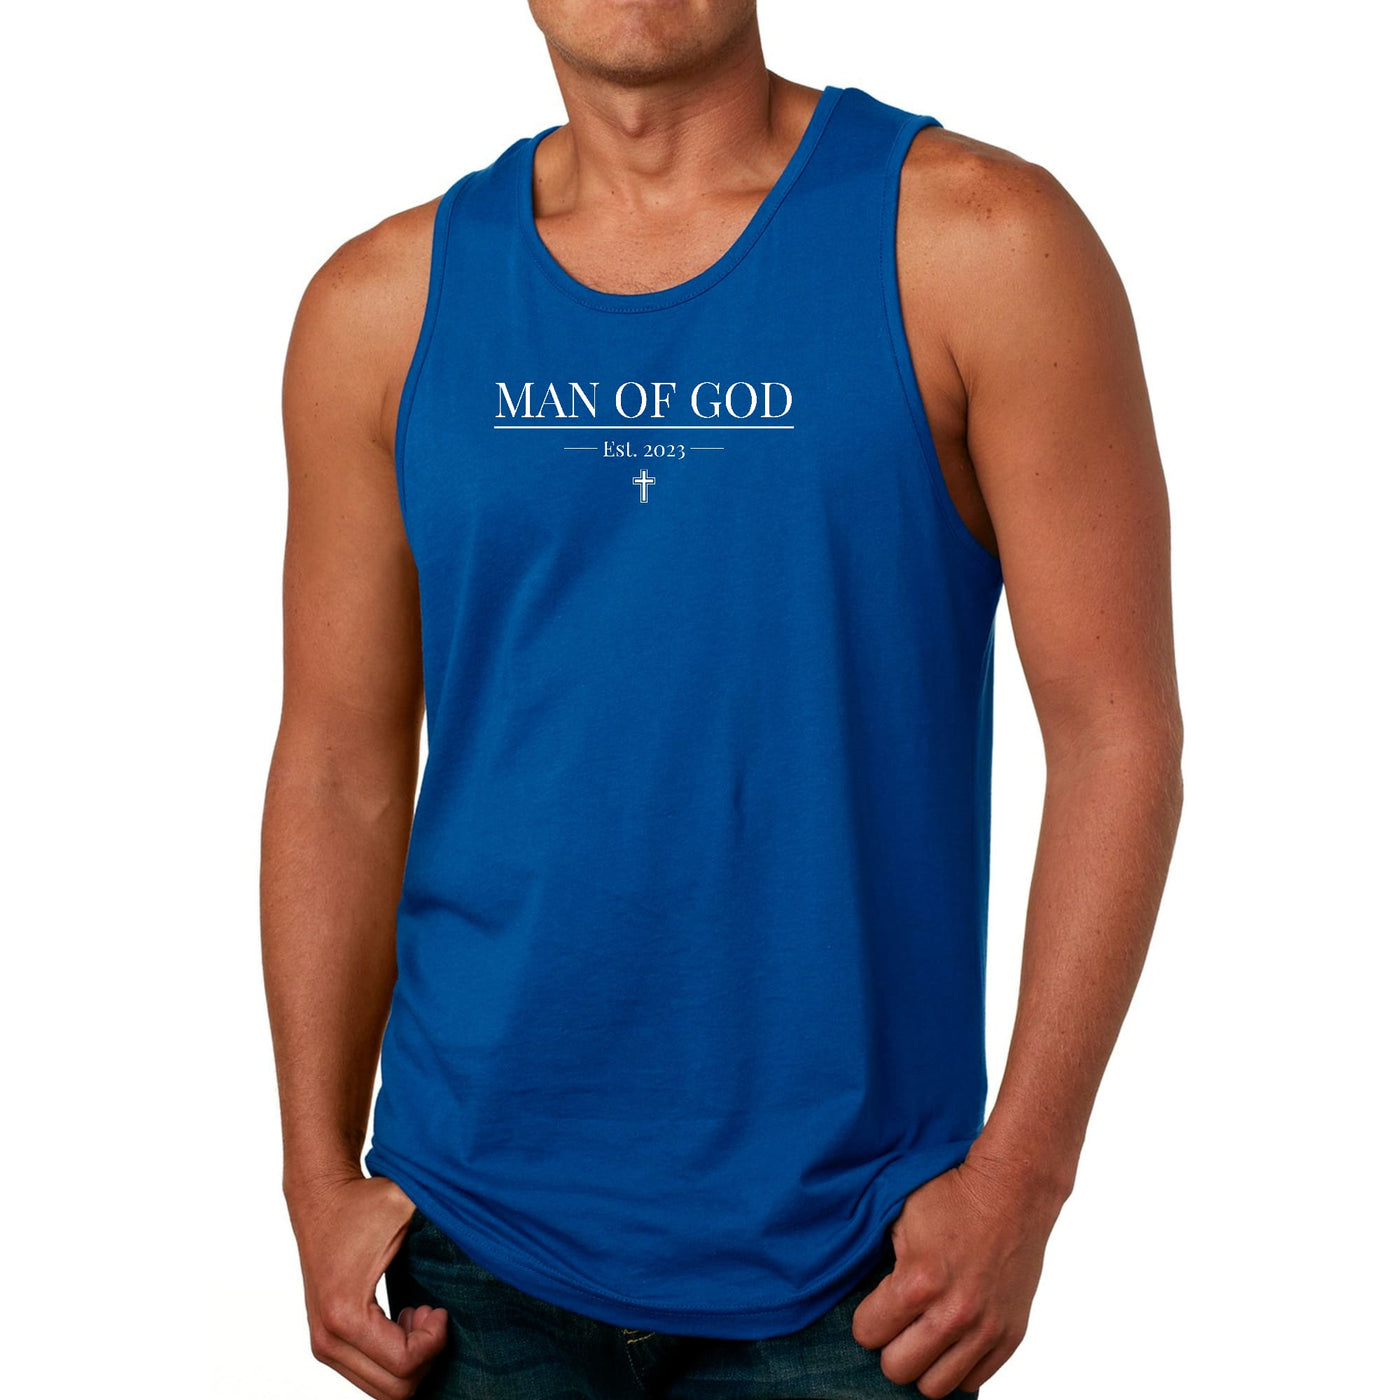 Mens Tank Top Fitness T - shirt Say It Soul Man Of God - Tops